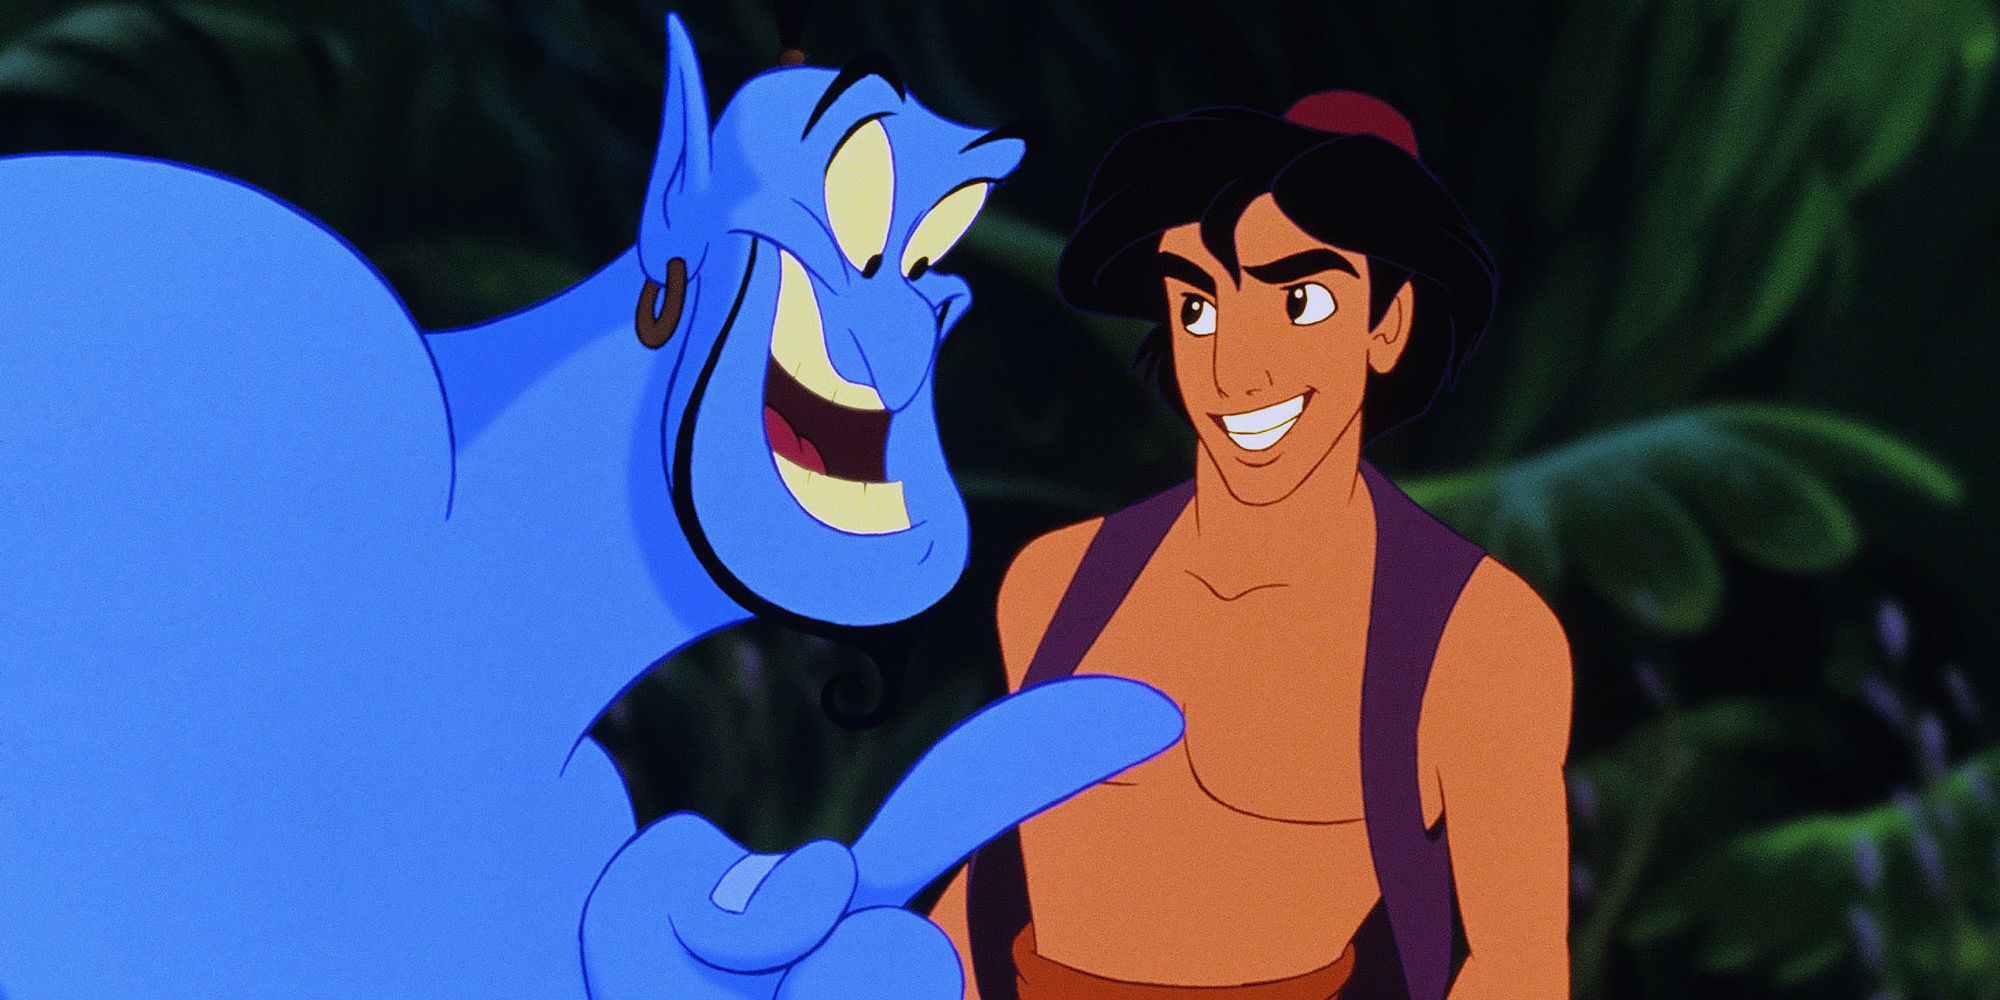 Robin Williams as Genie, Scott Weinger as Aladdin in Aladdin